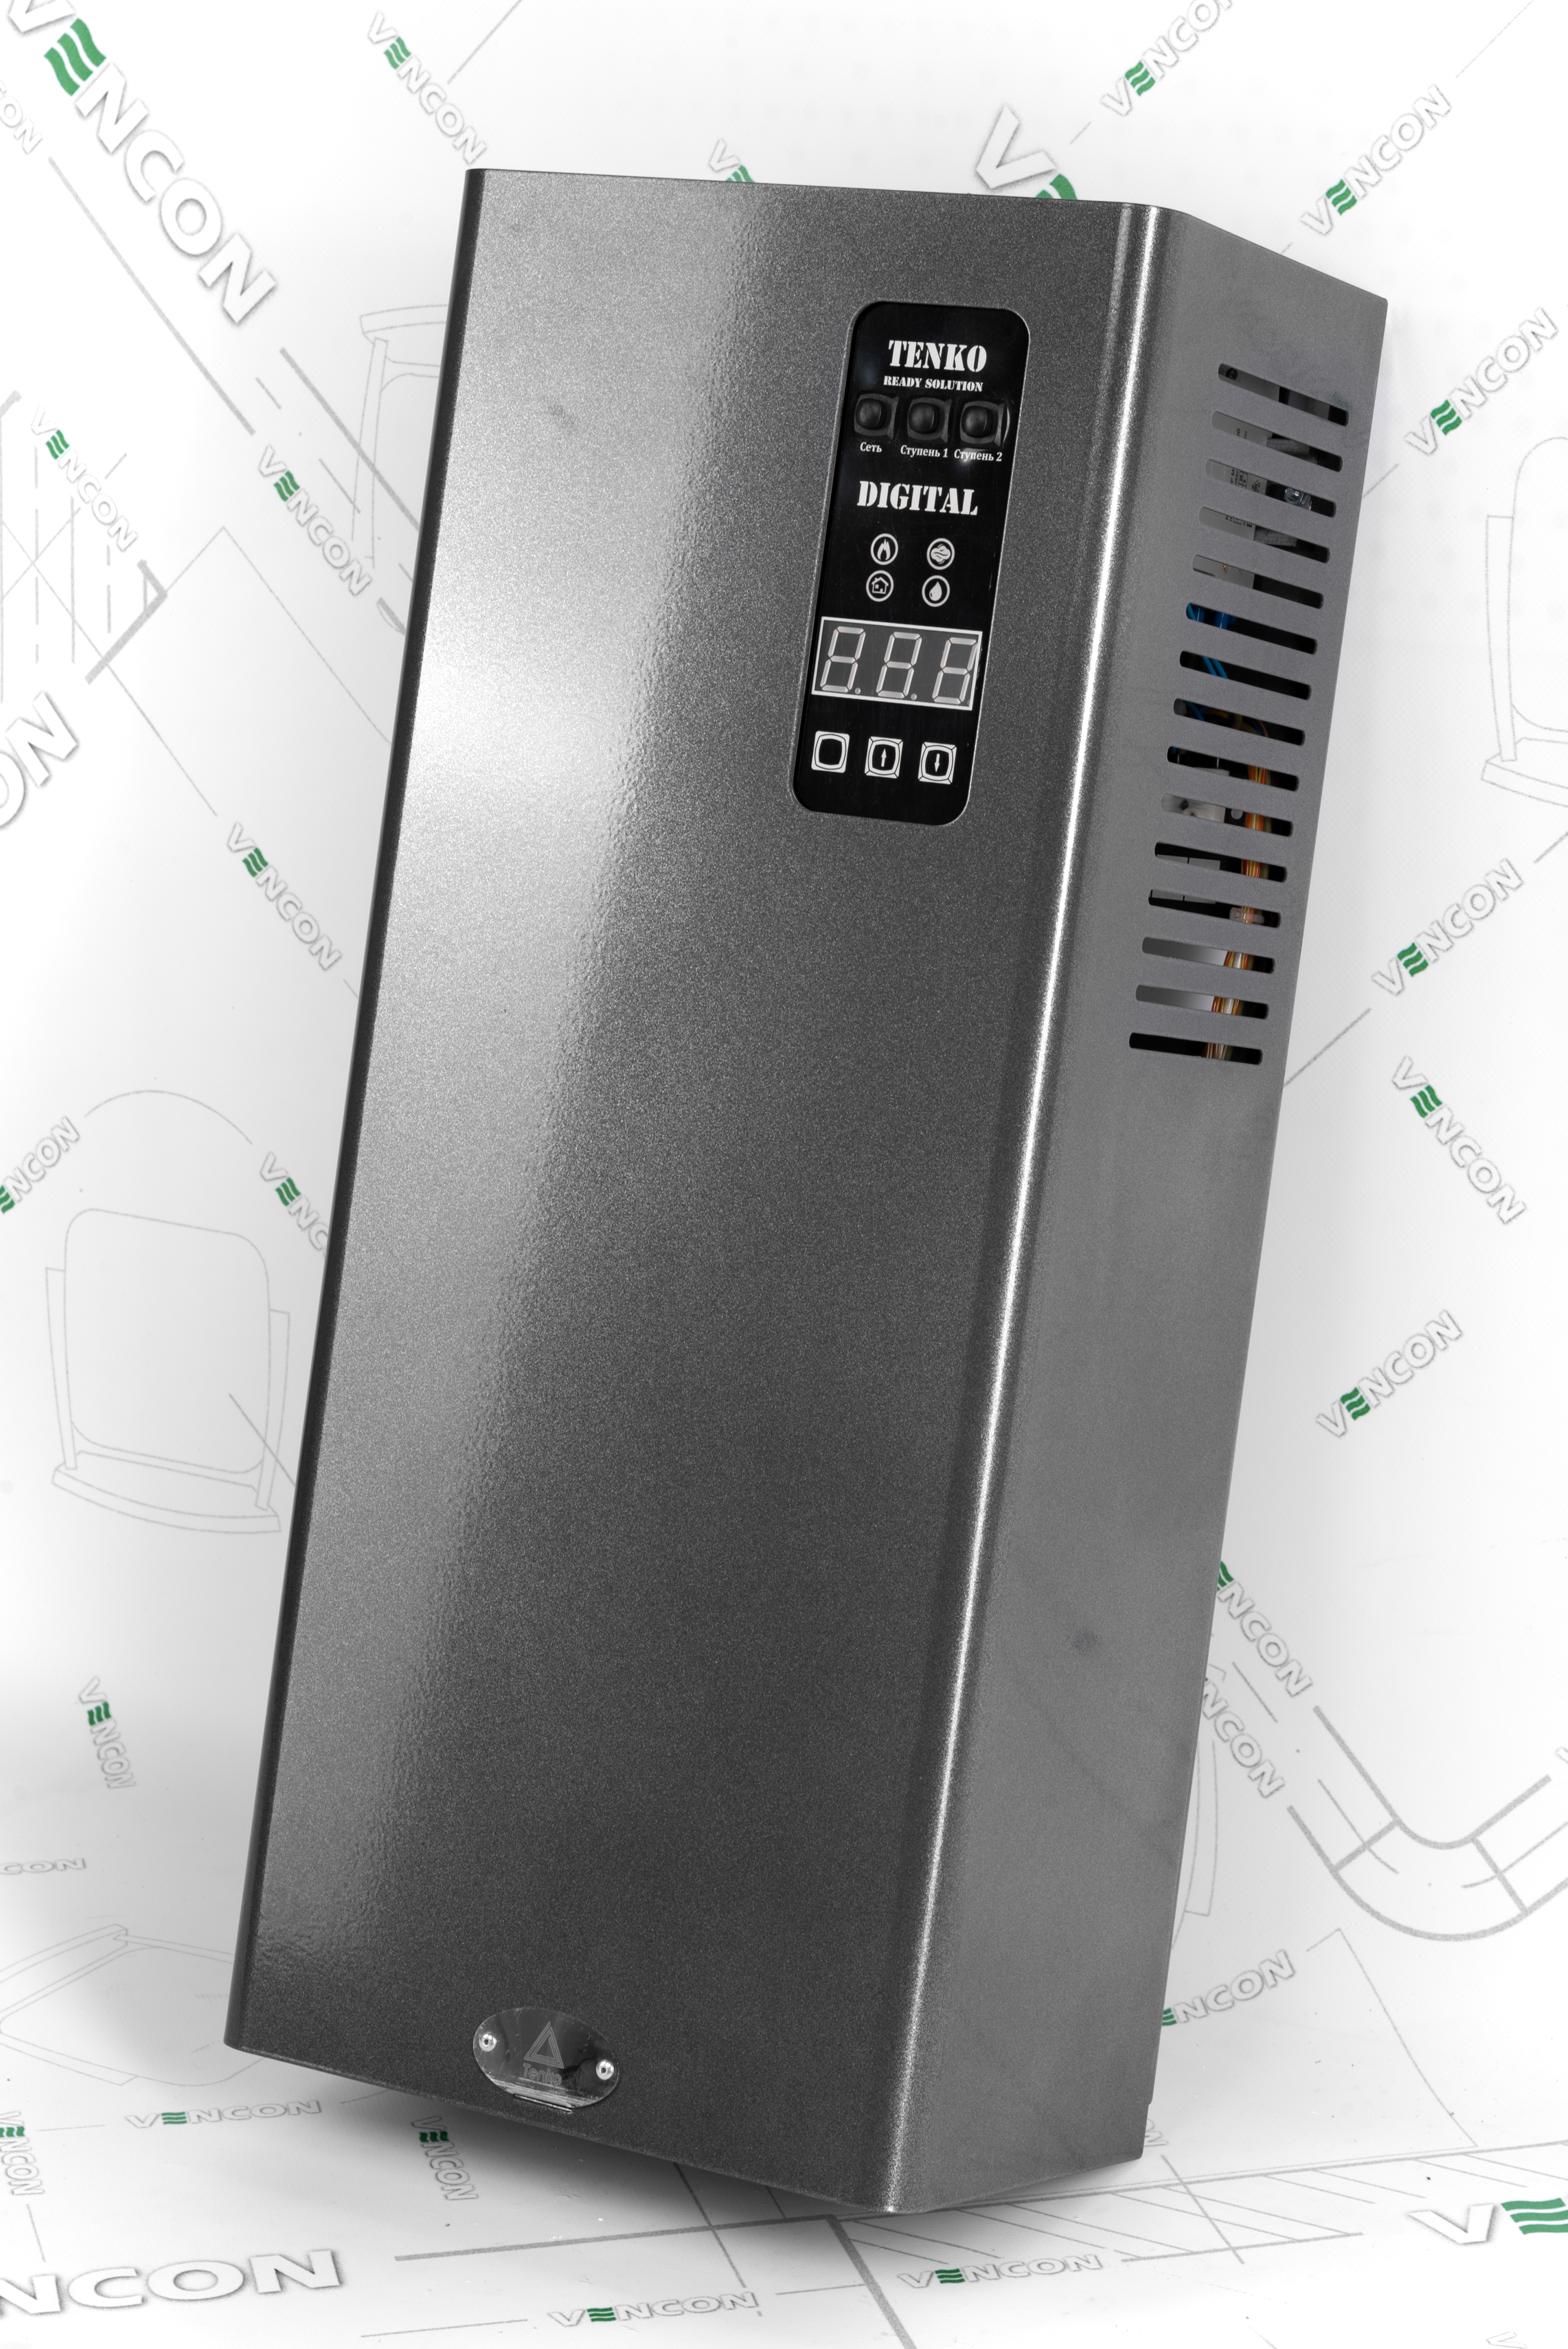 Электрический котел Tenko Digital Standart 3 220 цена 12237.00 грн - фотография 2